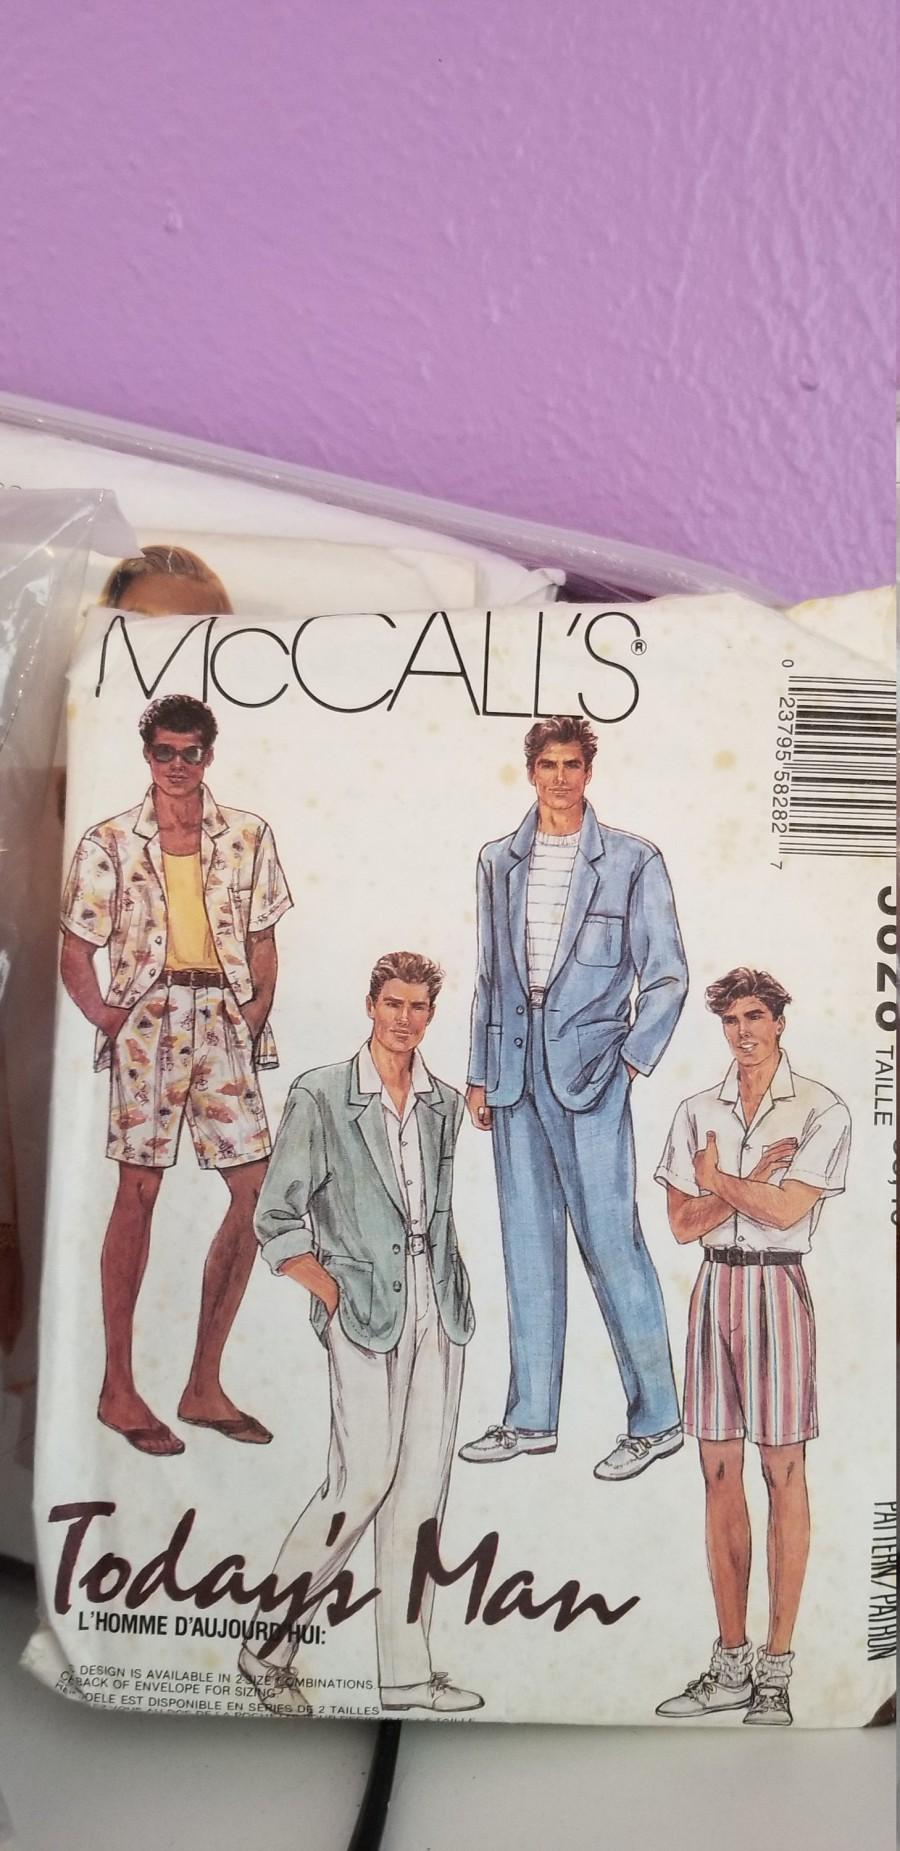 زفاف - McCalls mens unlined jacket shirt and pants or shorts sizes 38 to 40 some precut pieces